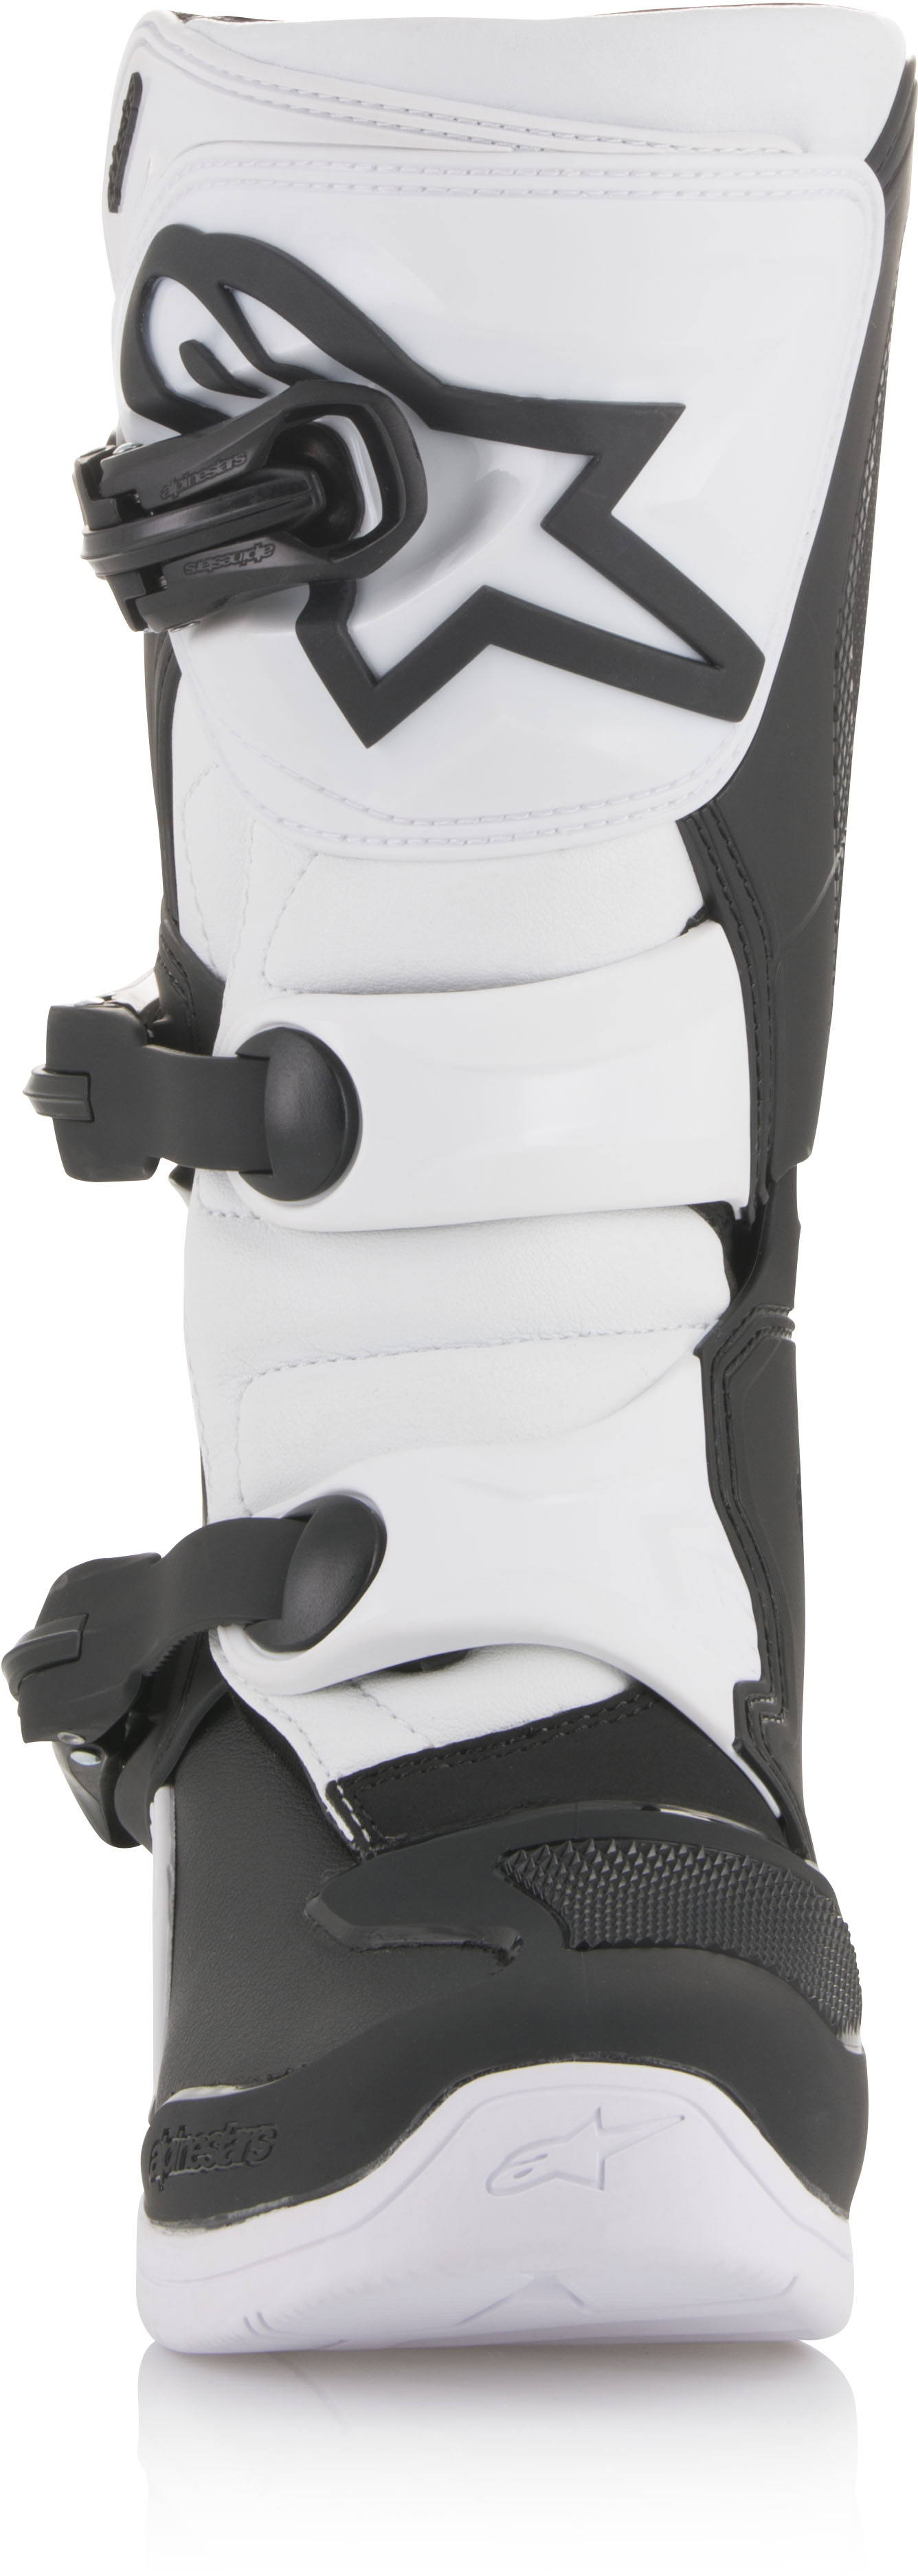 Tech 3S Boots Black/White Size 2 - Click Image to Close